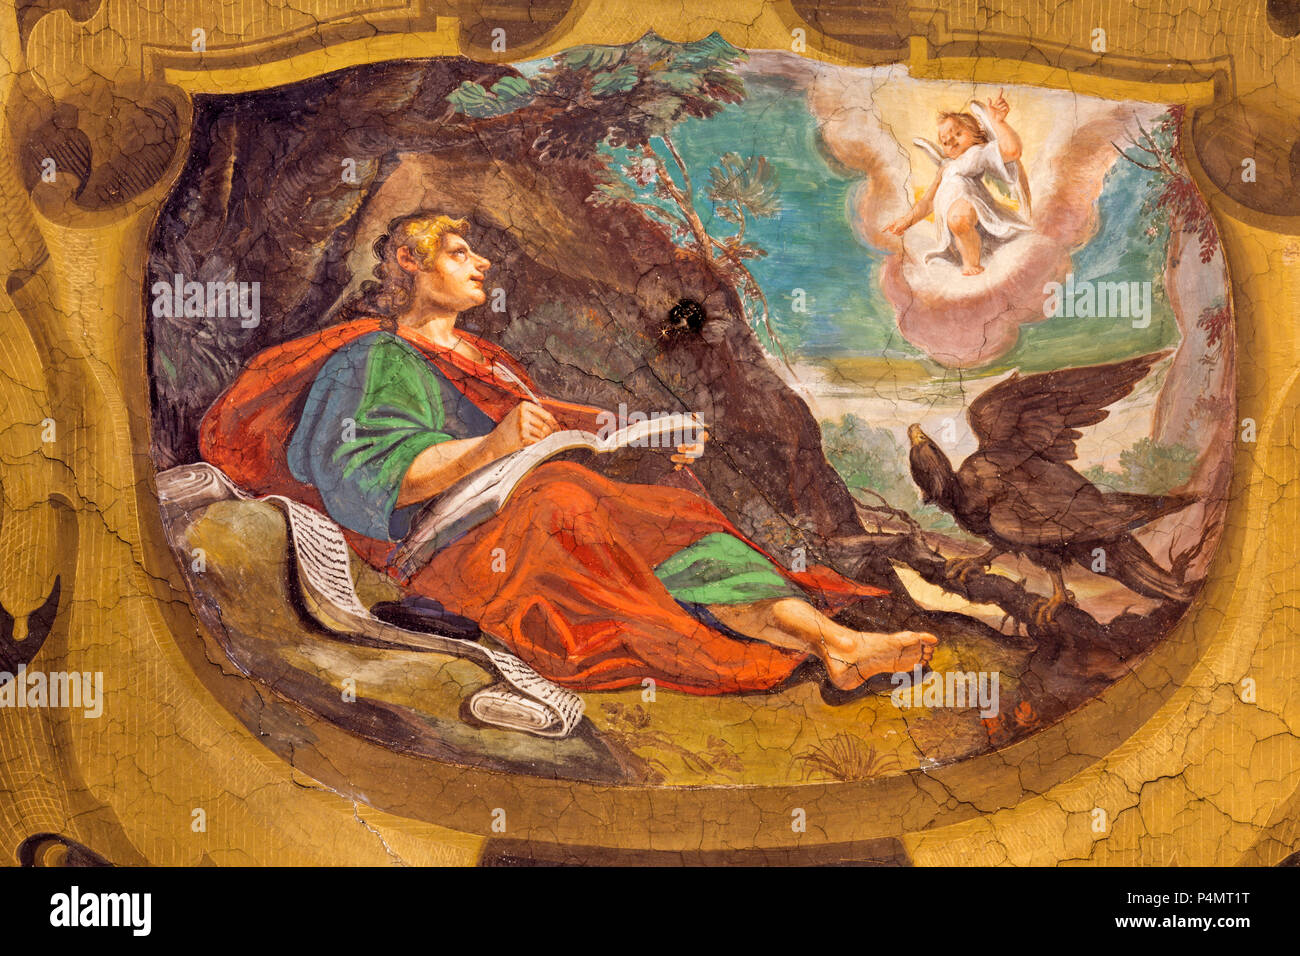 REGGIO EMILIA, ITALY - APRIL 13, 2018: The fresco of Vision of St. John the Evangelist on the Patmos island in church Chiesa di San Giovanni Evangelis Stock Photo